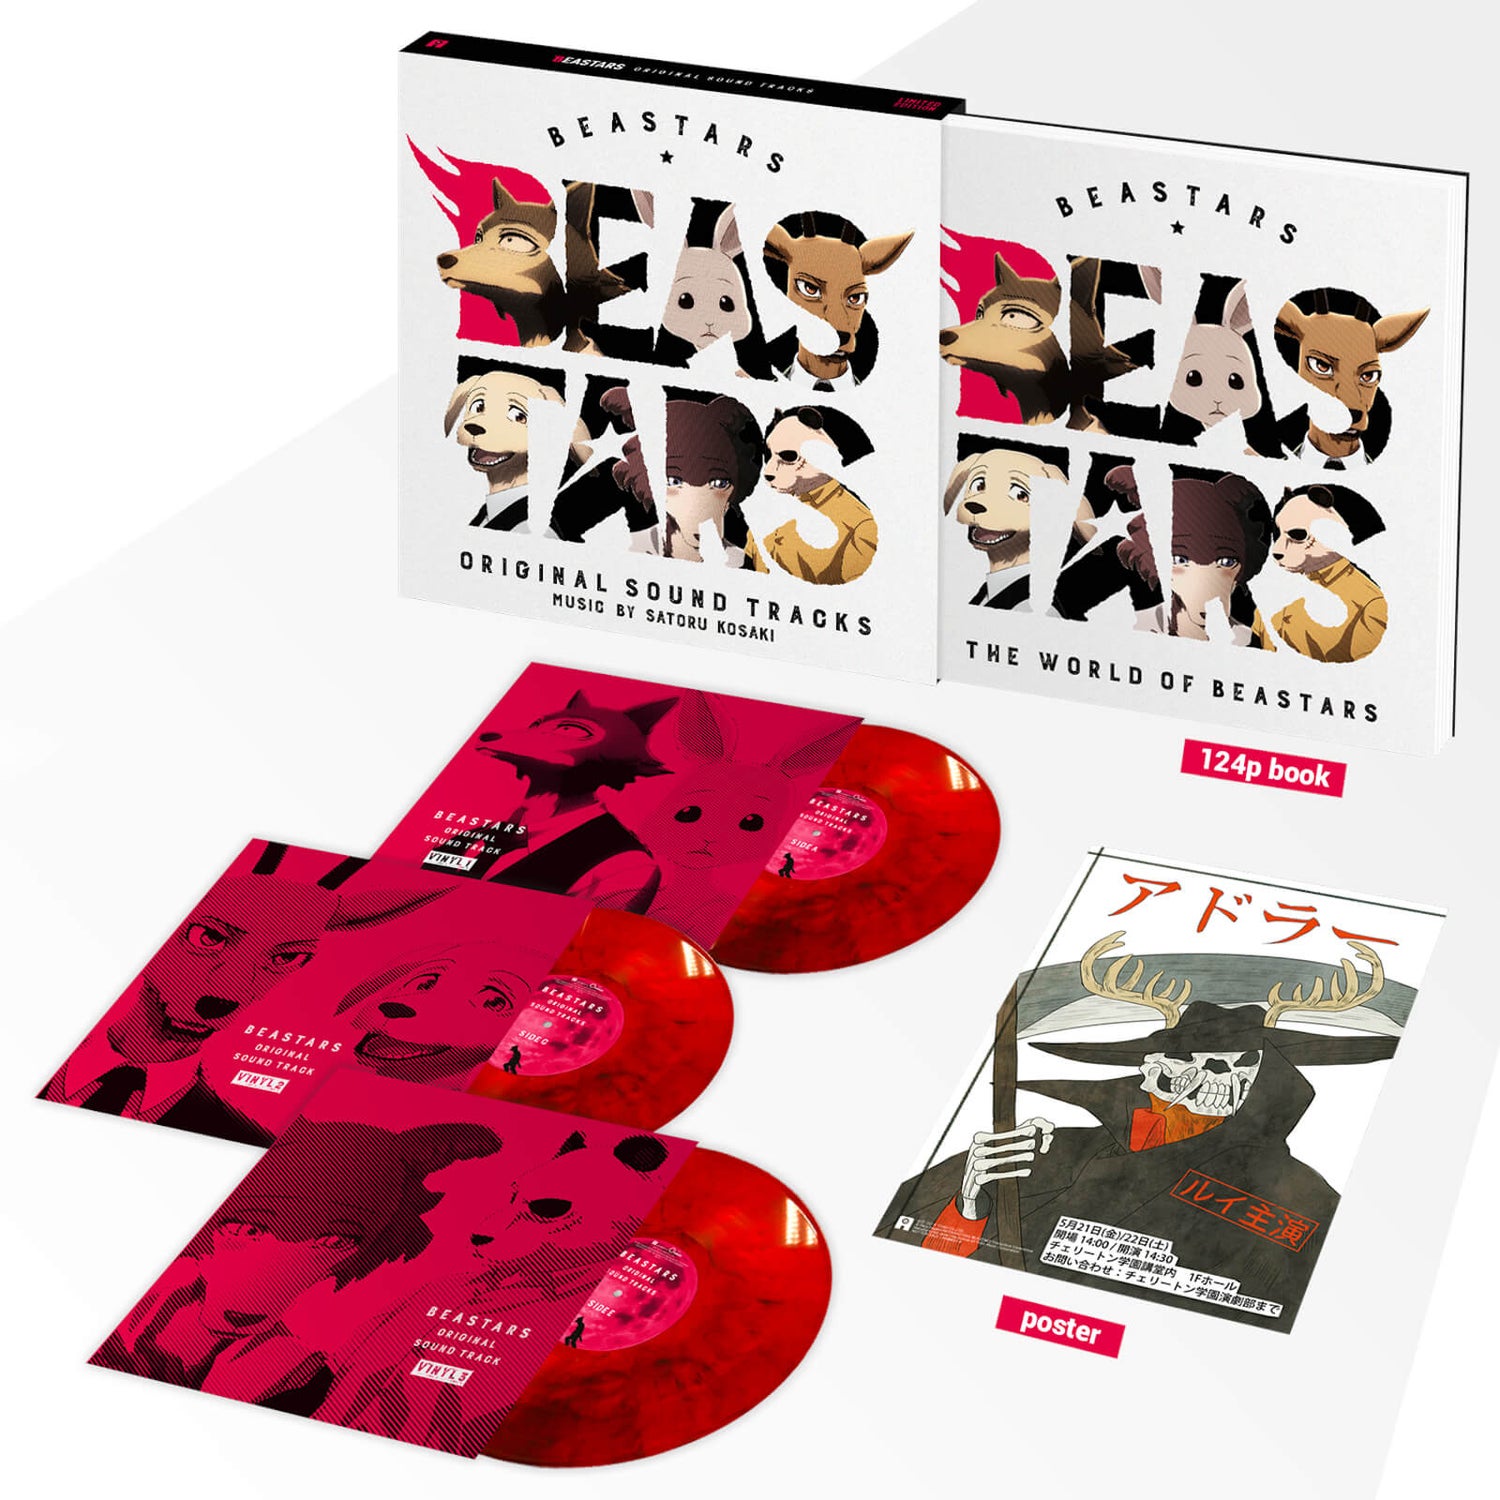 Anime Limited - Beastars (originele soundtrack) 180g 3xLP Deluxe Edition Box Set (Zavvi Exclusive Red)